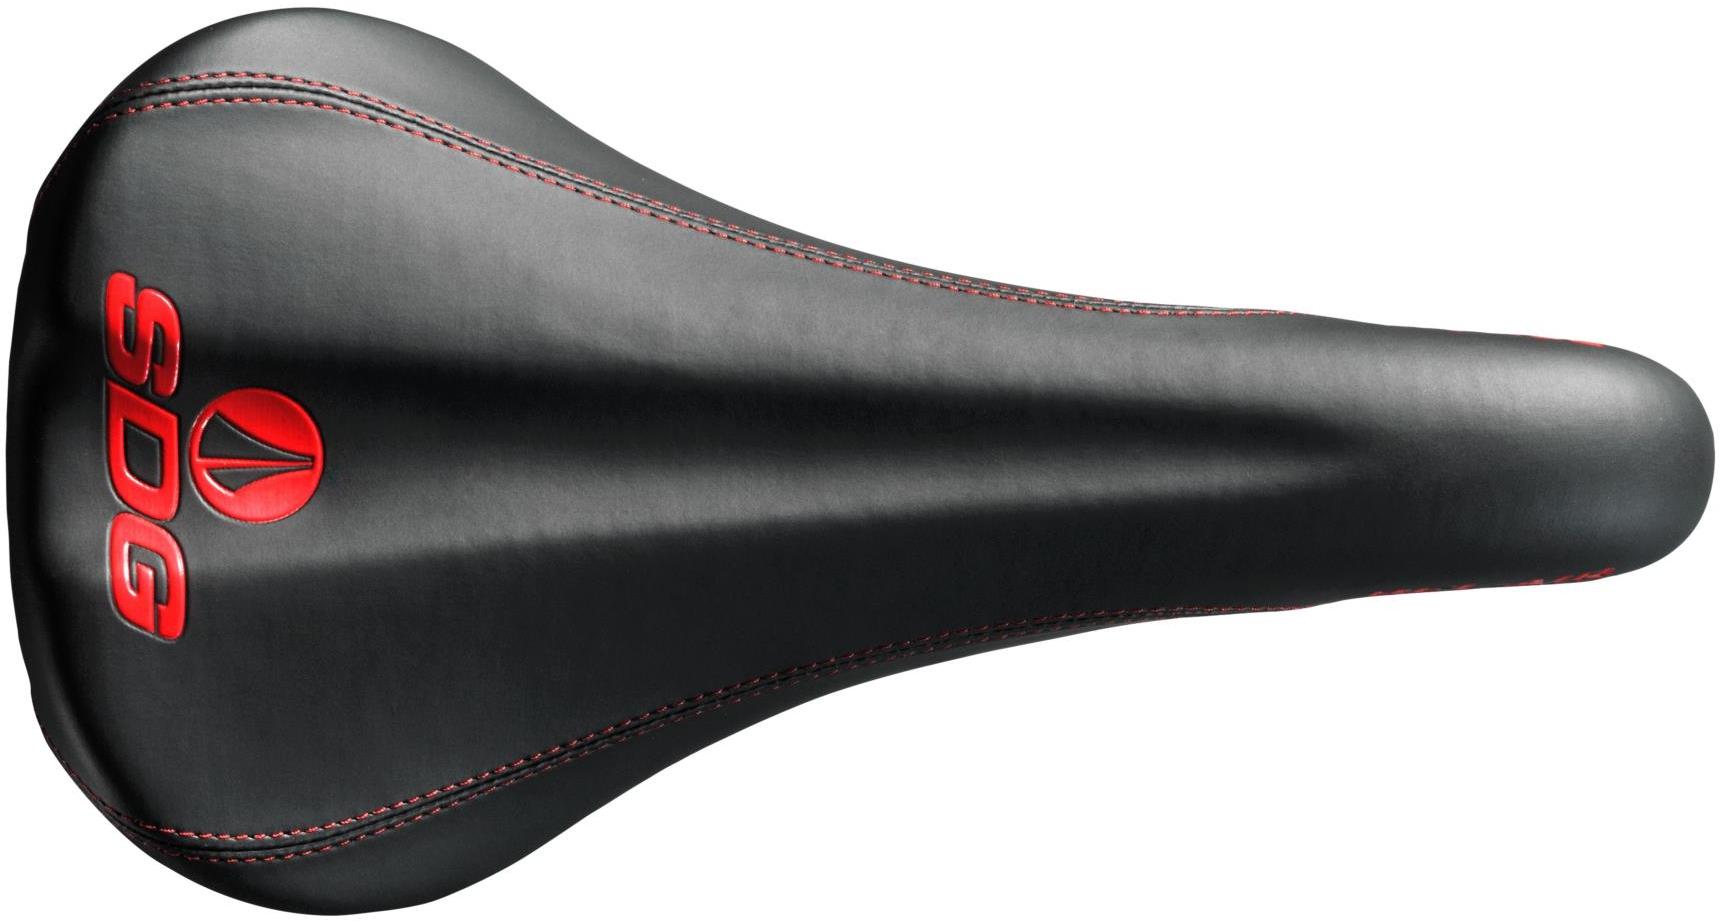 Sdg Bel Air Saddle With Steel Rails - Black/red